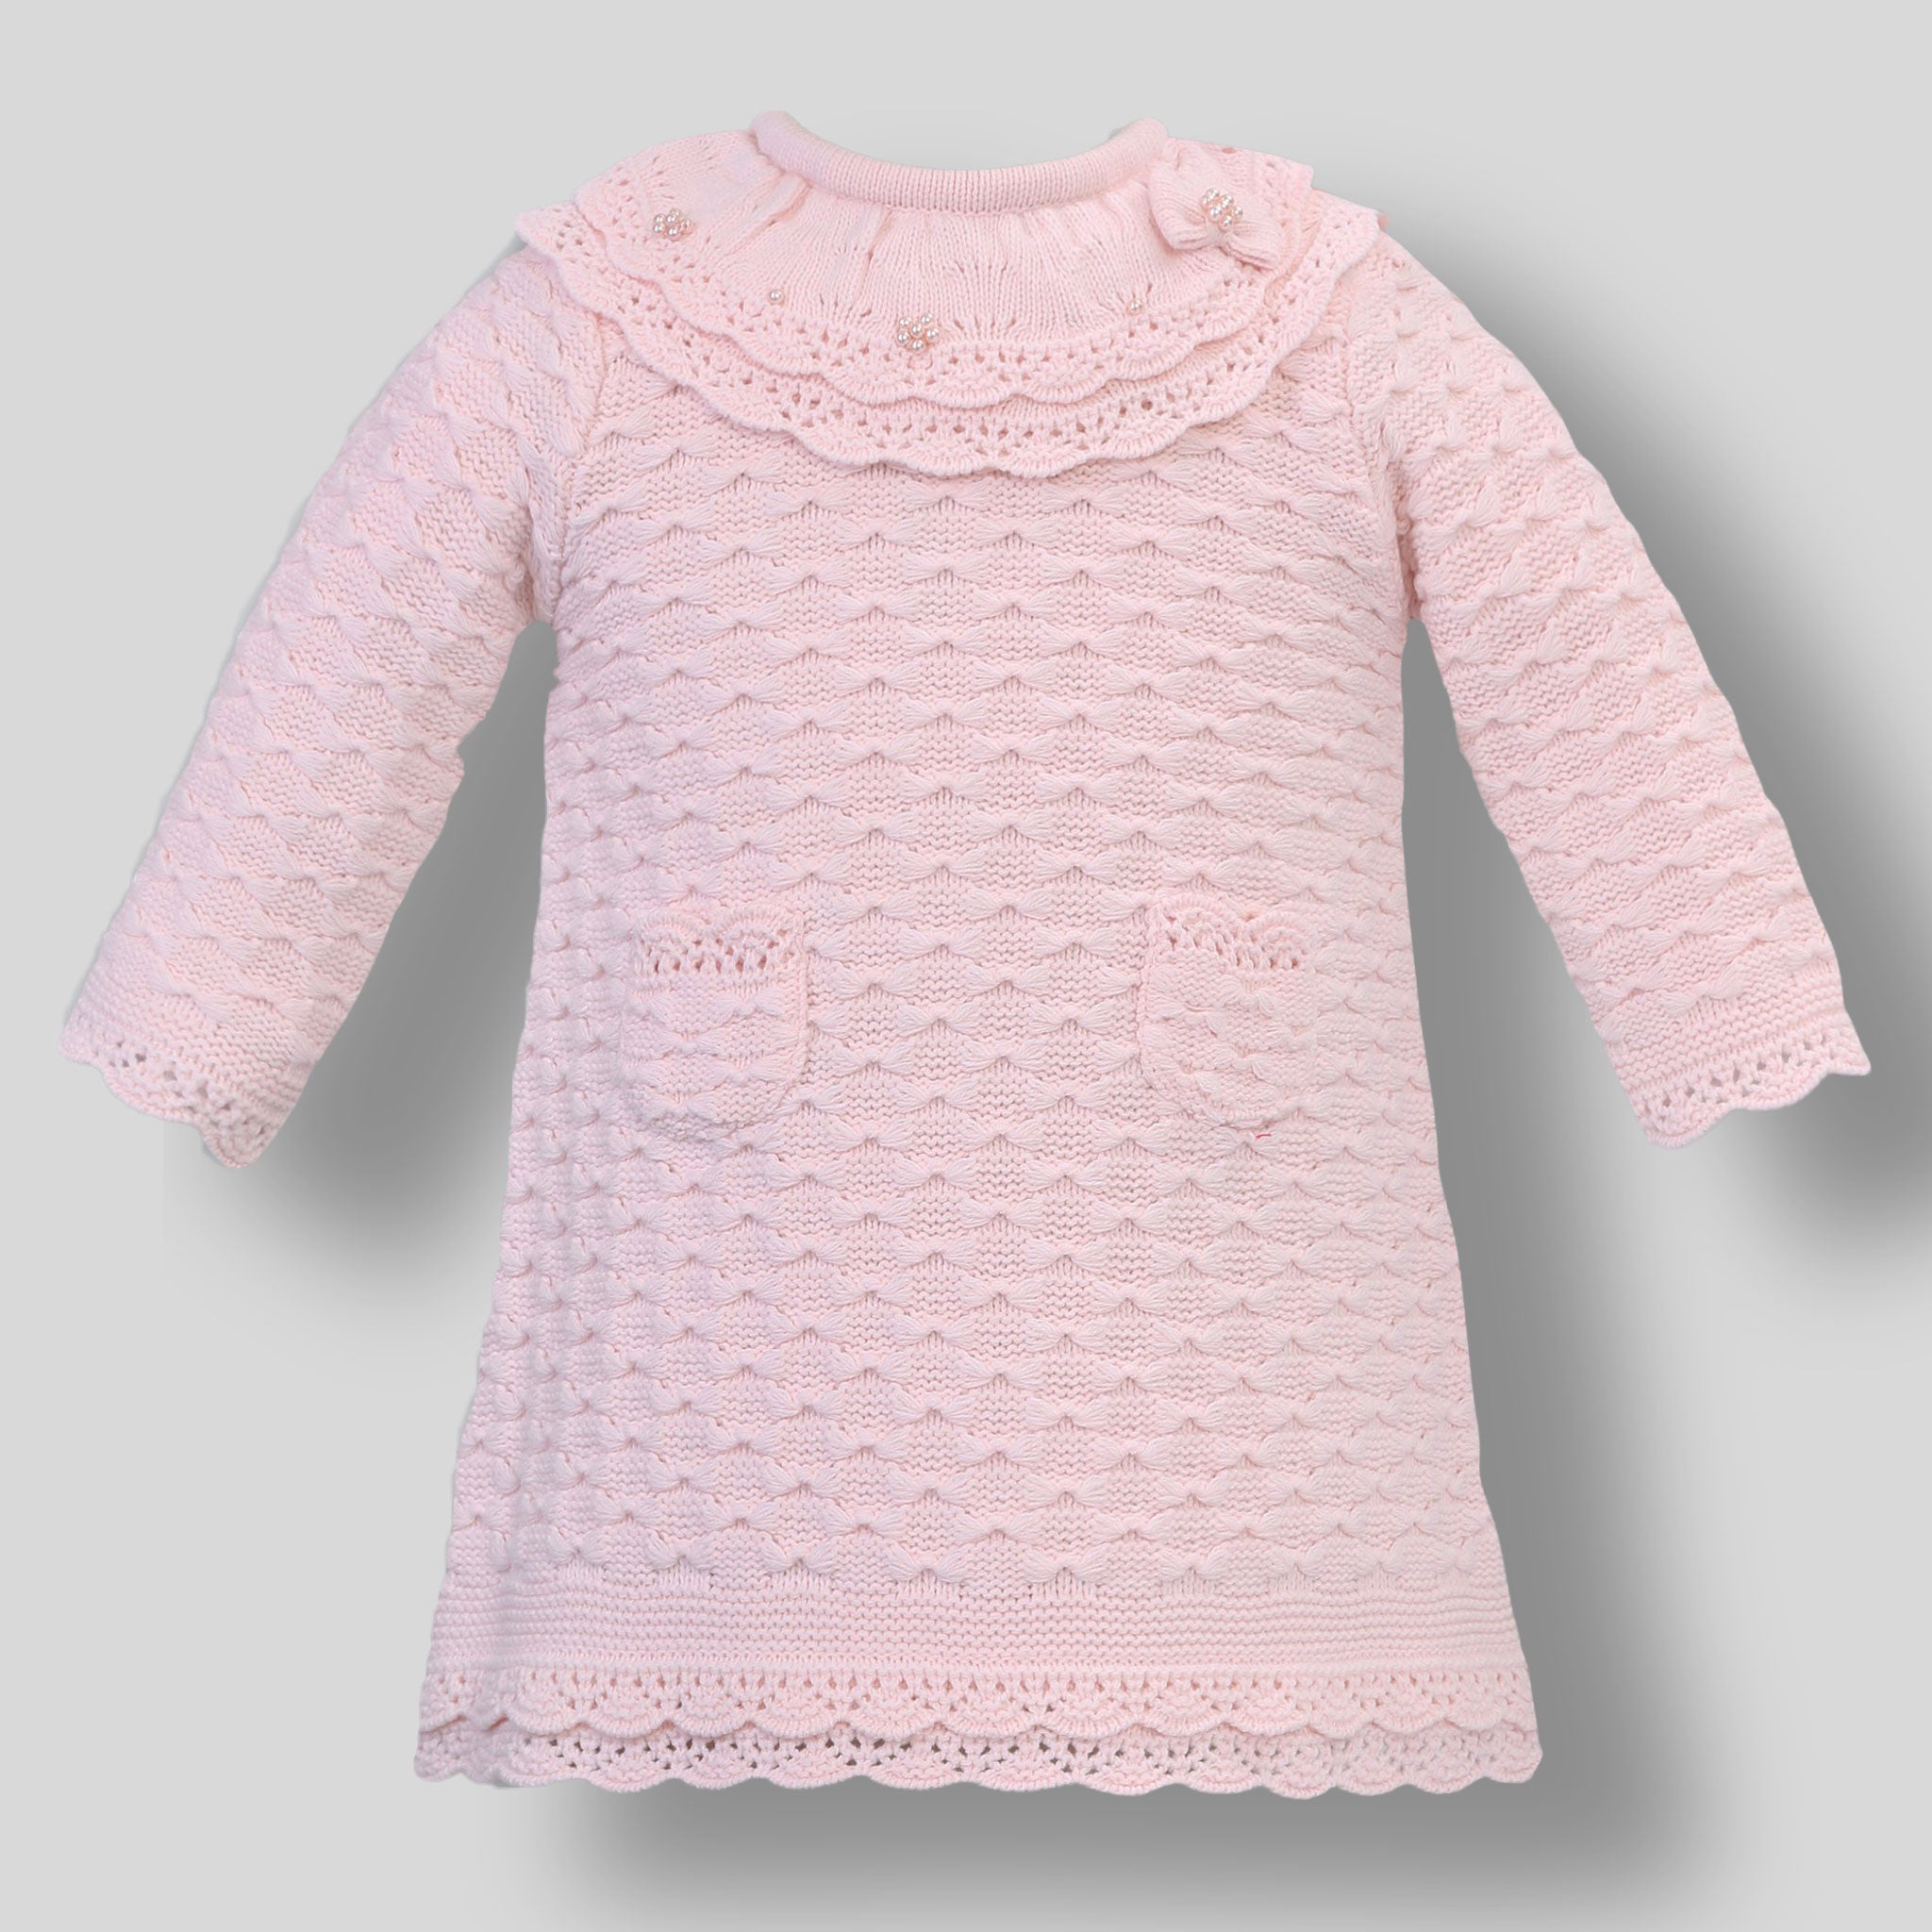 Baby Girl Knitted Dress - Pink - Sarah Louise 008189